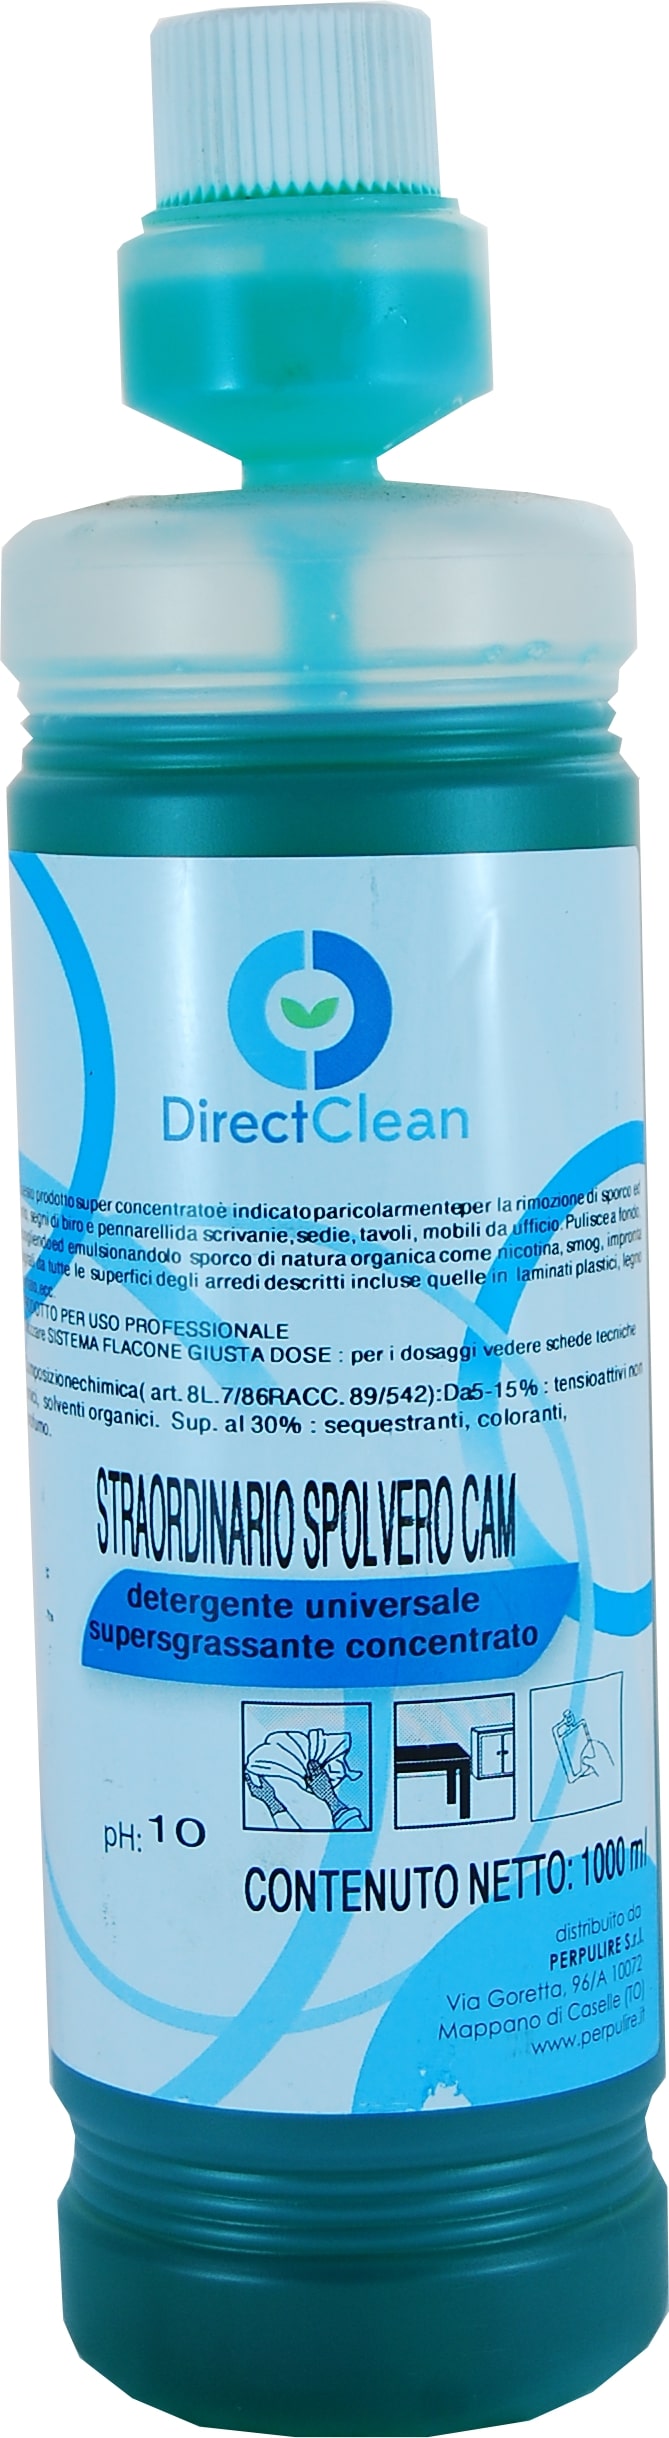 STRAORDINARIO SPOLVERO CONCENTRATO Detergente universale supersgrassante _formato 1 litro